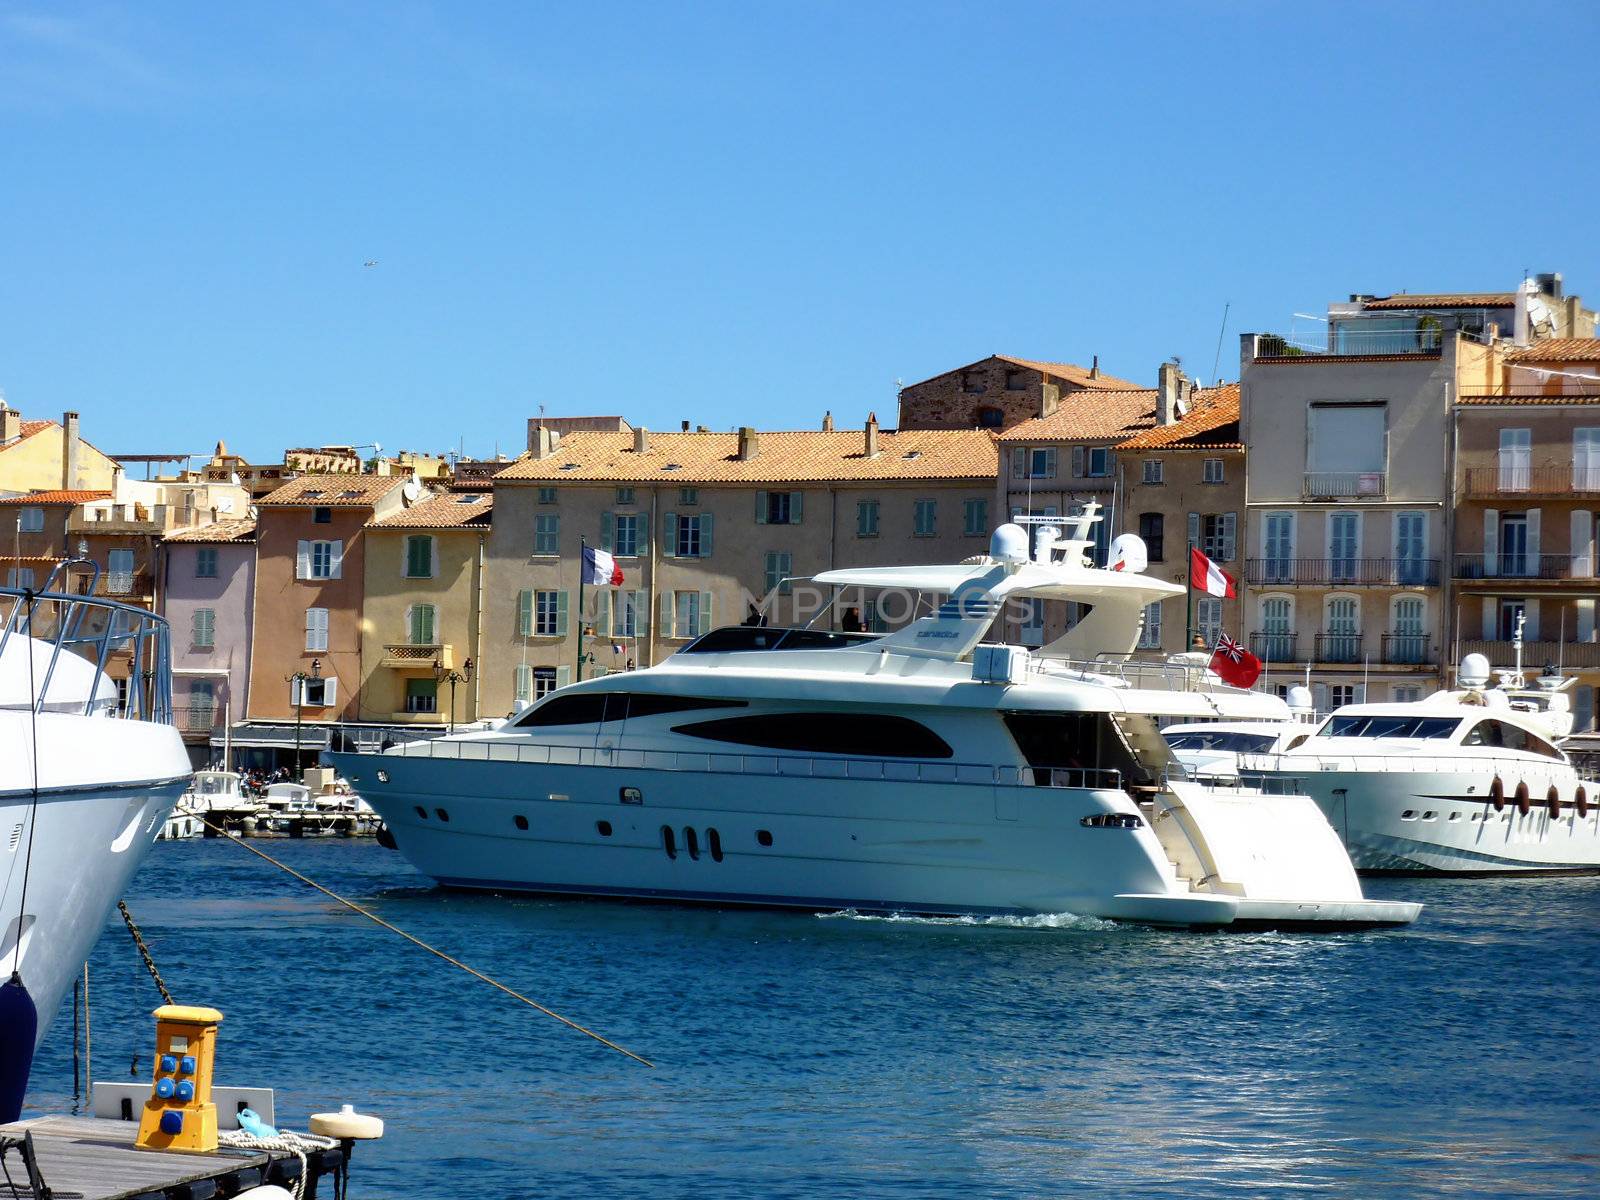 Big white yacht leaving Saint-Tropez port on Mediterrenean sea, south of France